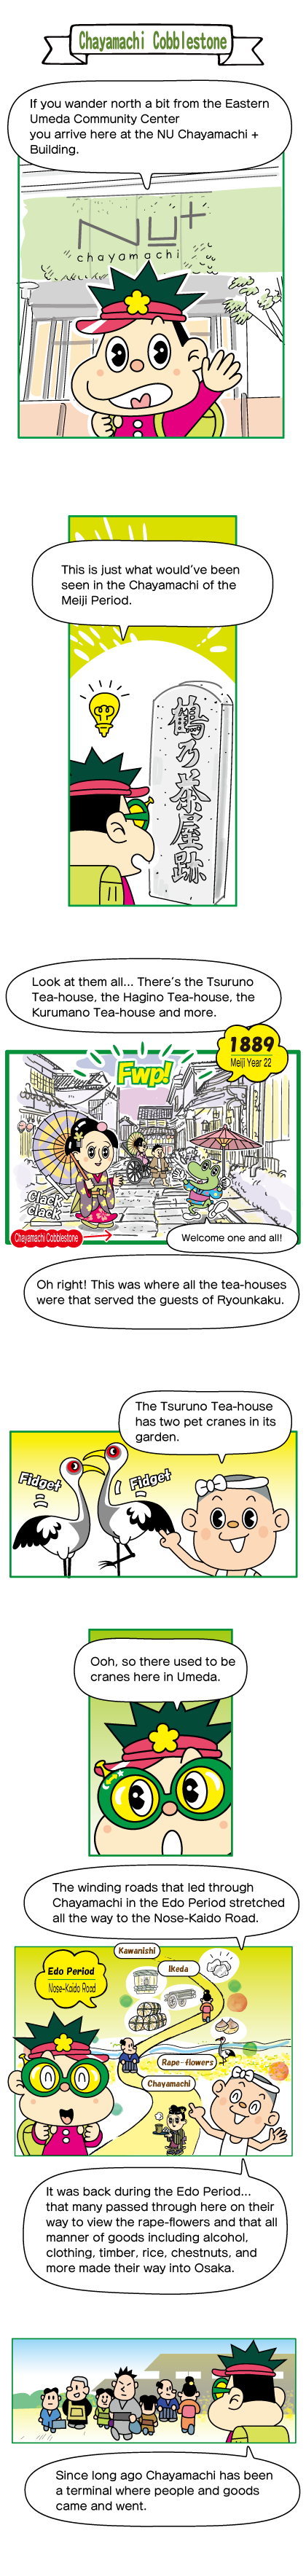 Cartoon on the history of Stone paving at Tsuruno Chaya 1